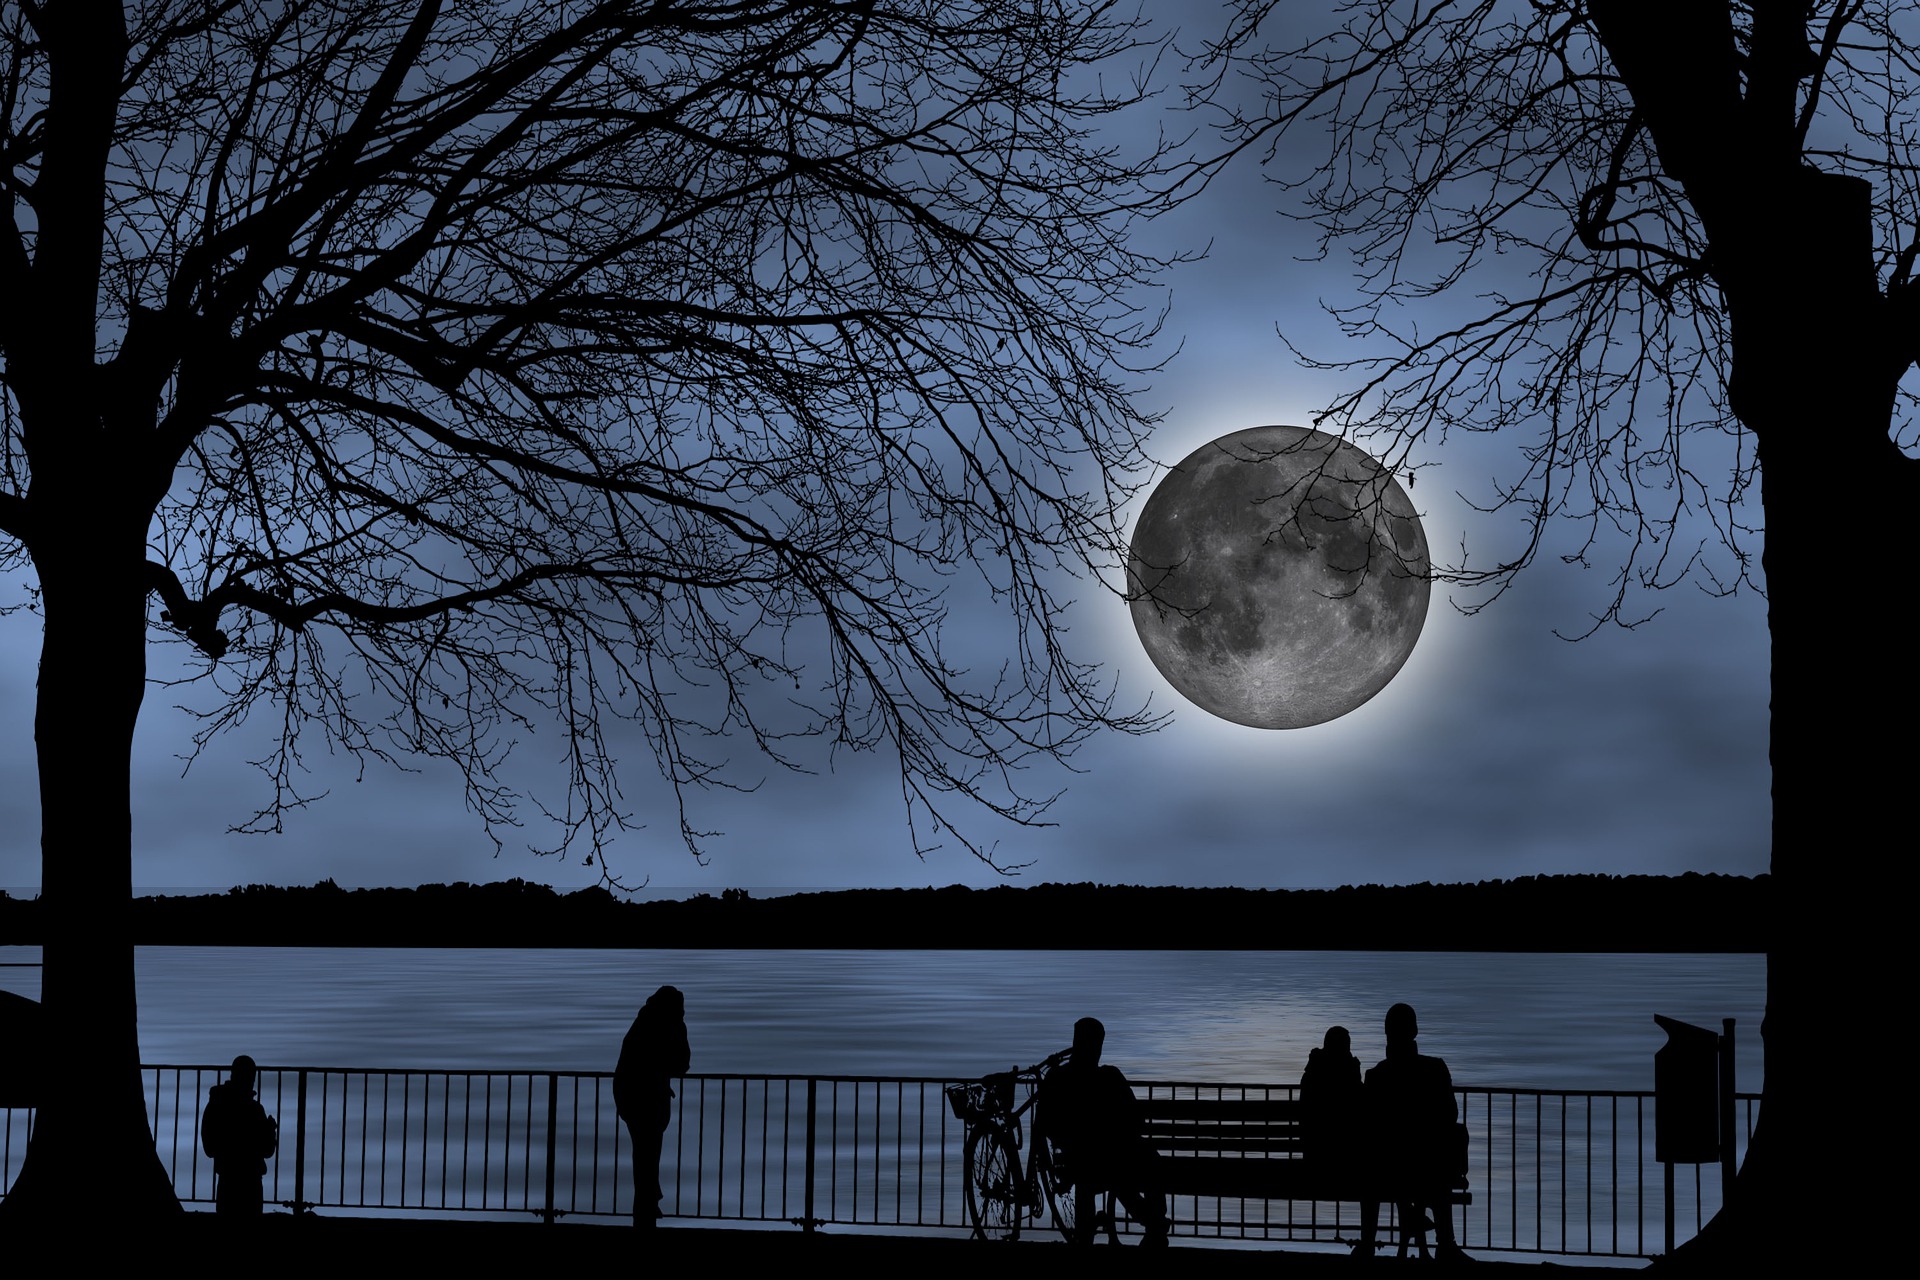 Look at the moon. Полнолуние. Лунная ночь. Полная Луна. Луна полнолуние.